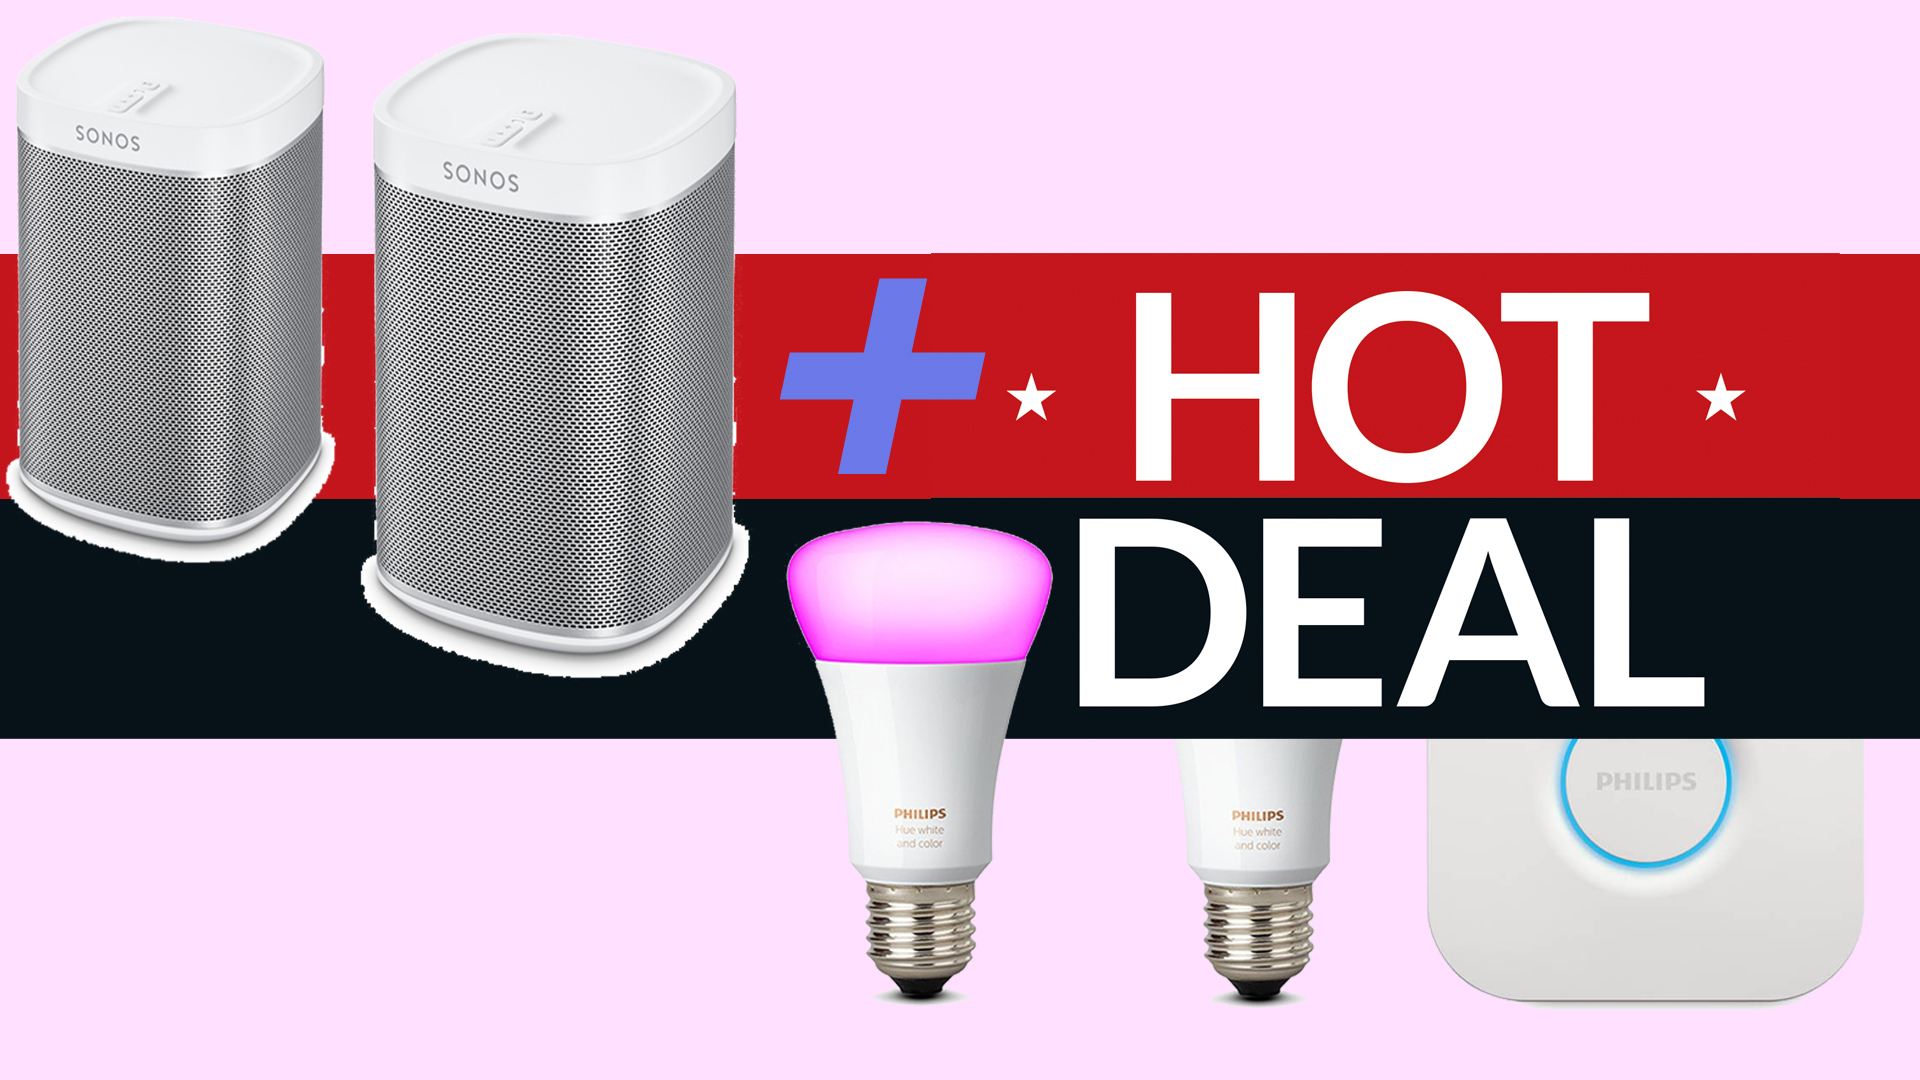 Philips Hue bulb deal for Sonos fans: get off a Hue and Sonos bundle! | T3